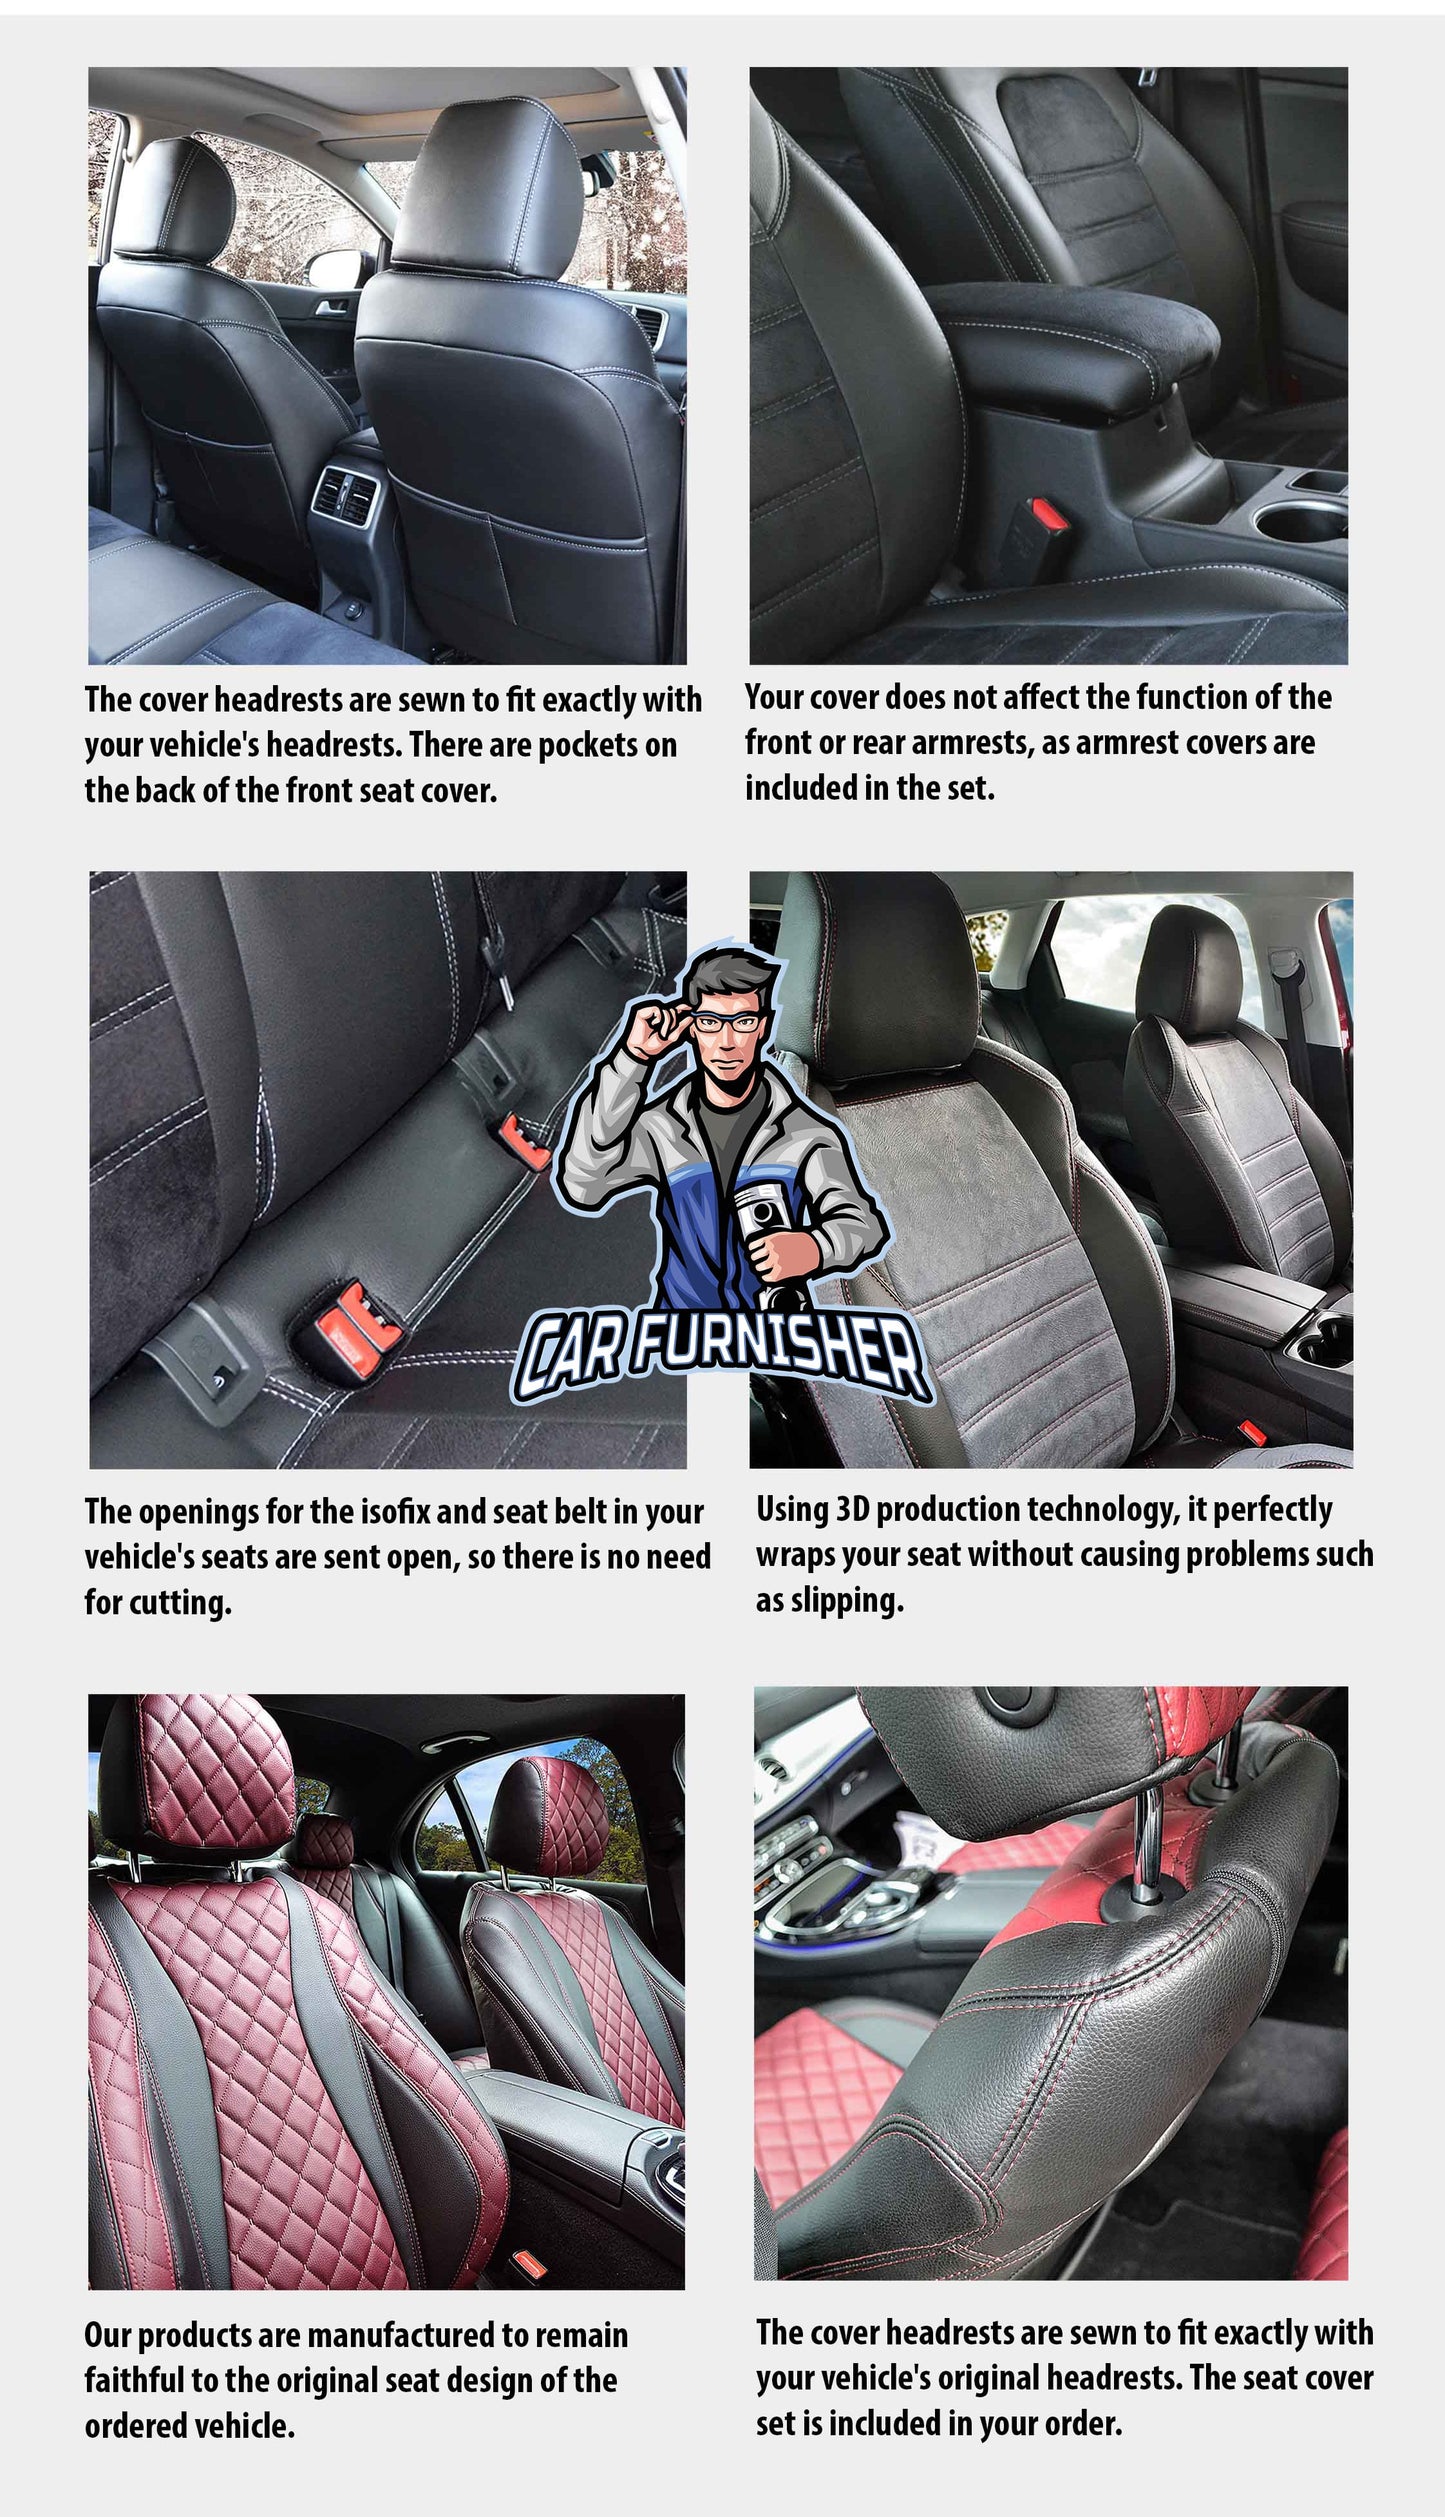 Mazda E2200 Seat Covers Tokyo Leather Design Black Leather